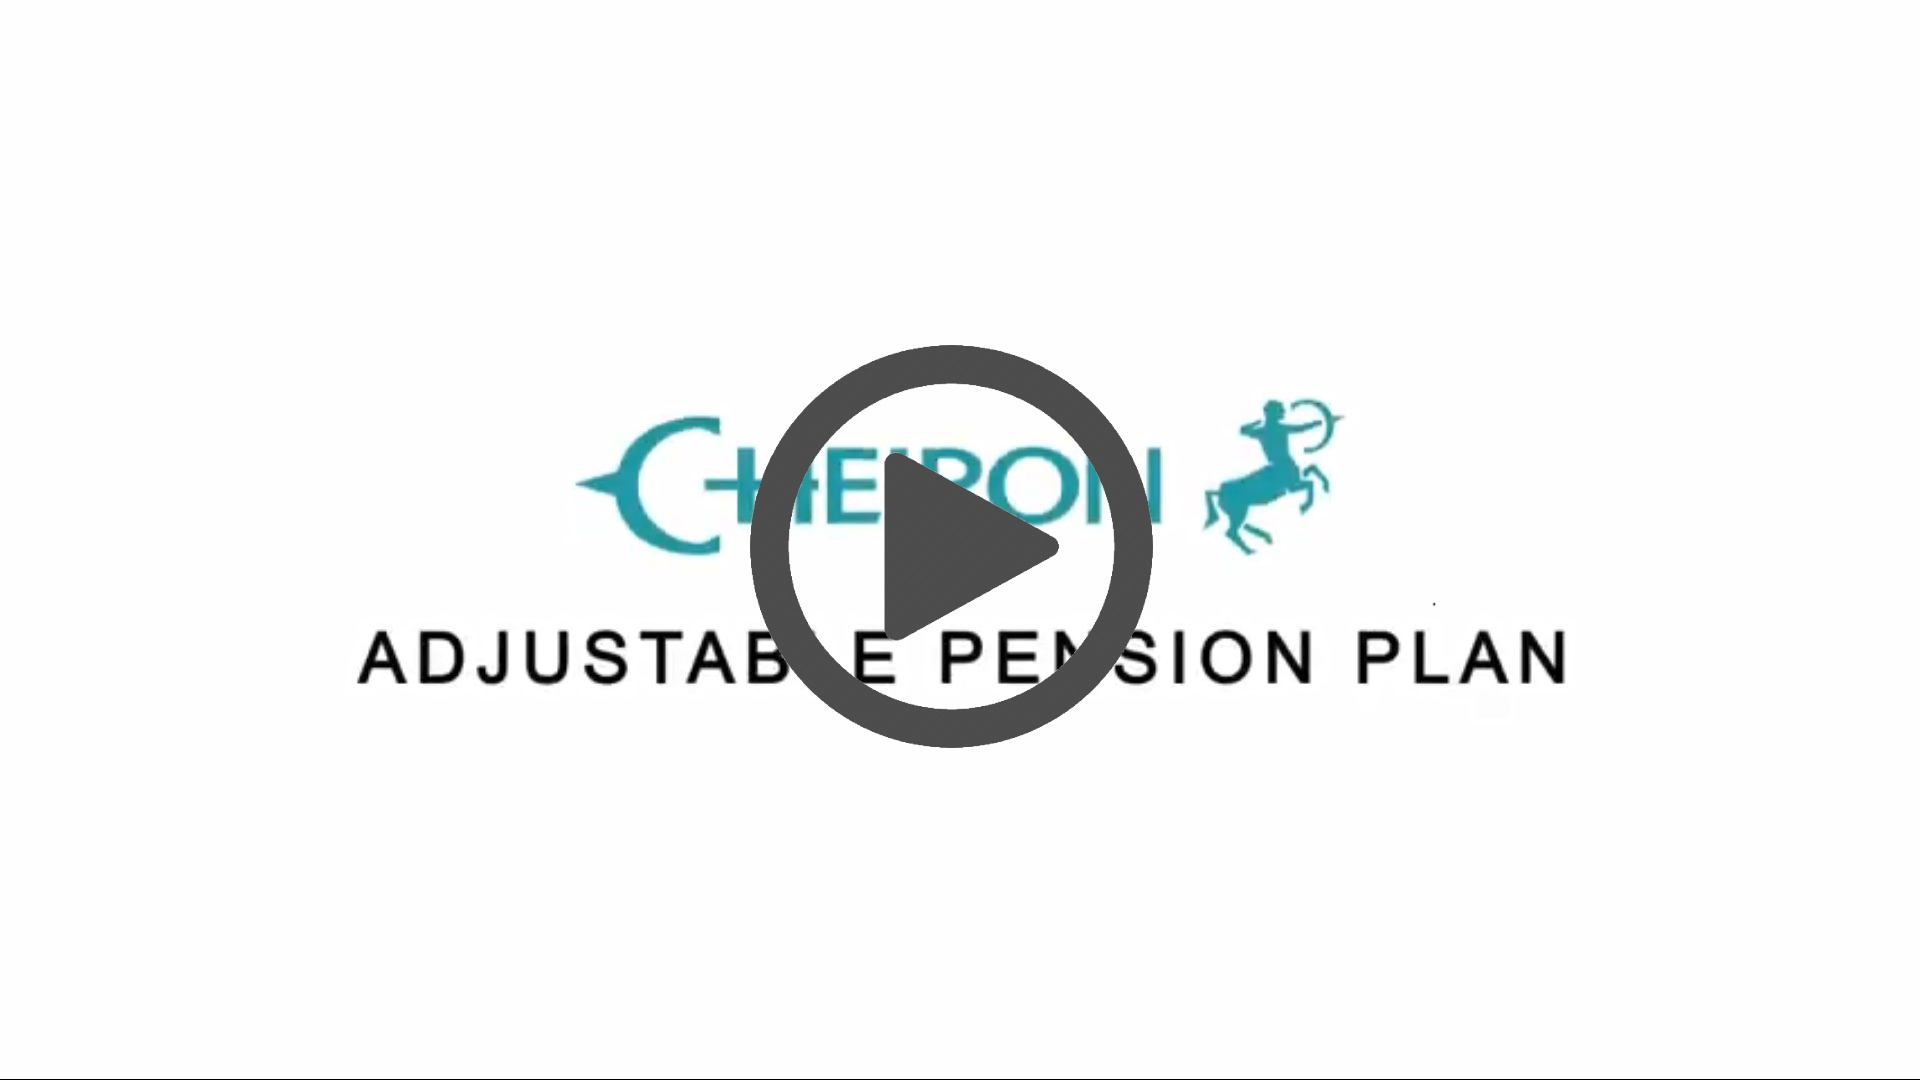 Cheiron Adjustable Pension Plan